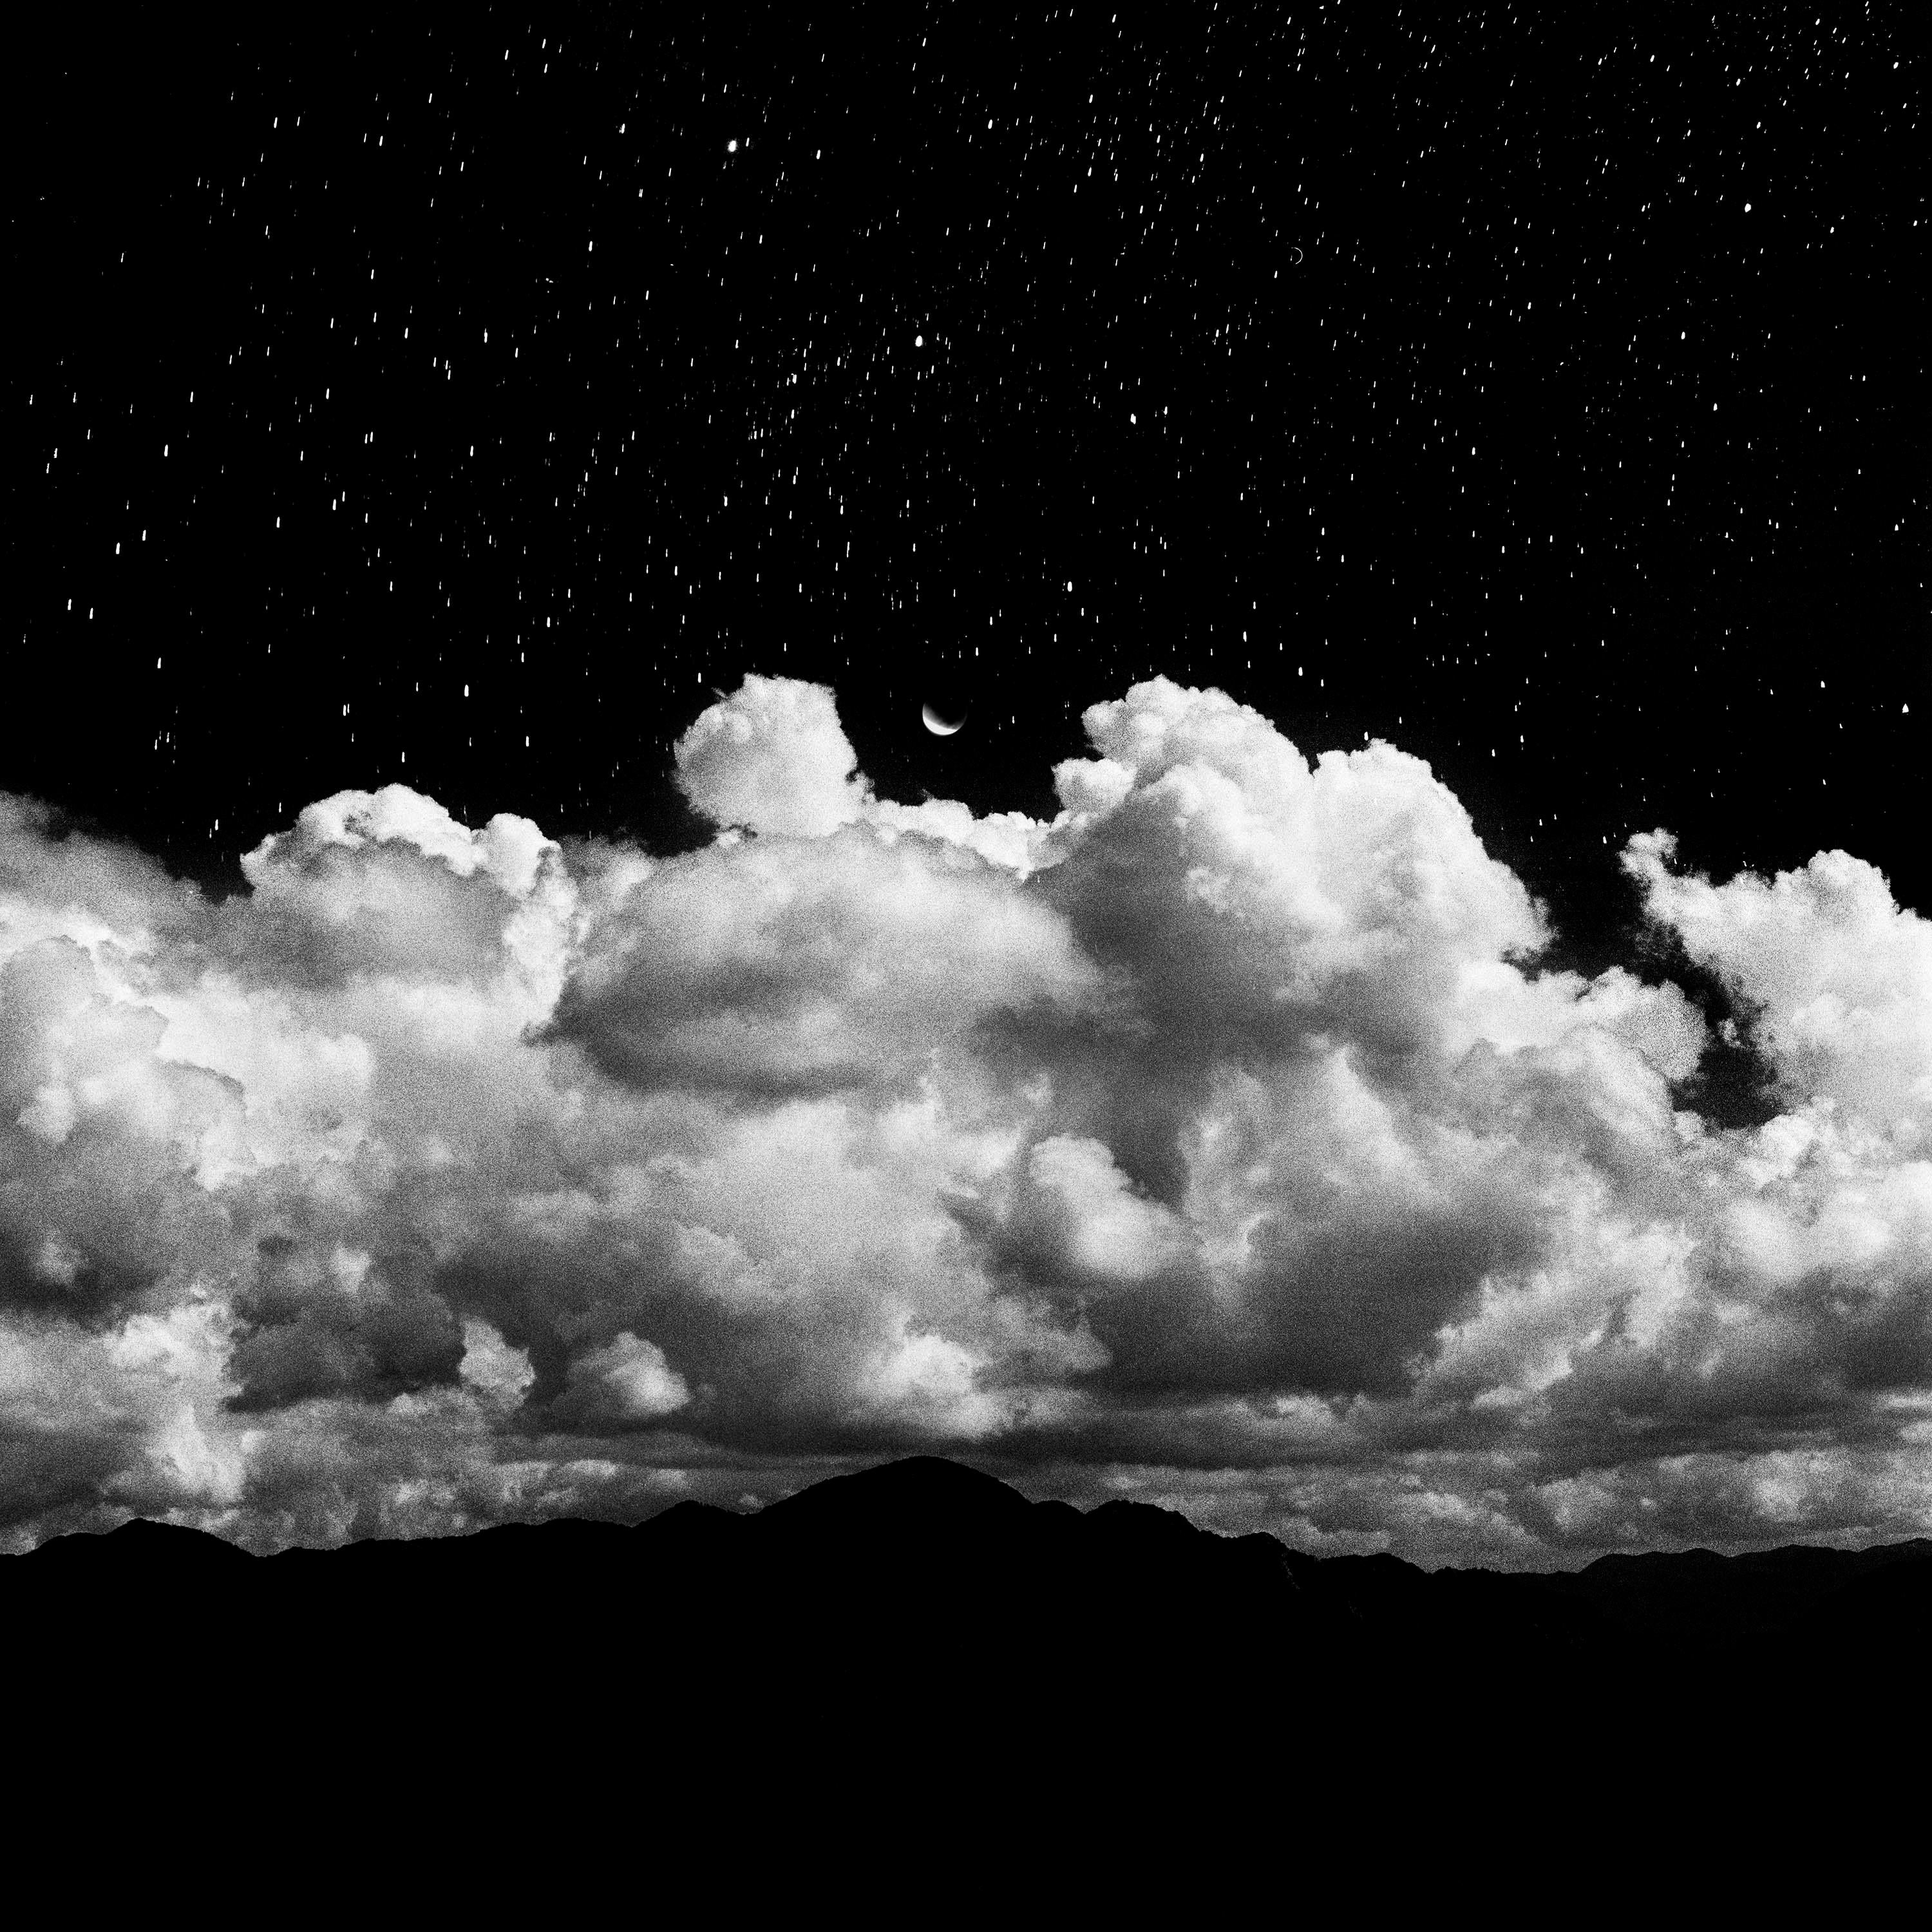 Black Mountain - A contemporary black and white landscape photograph